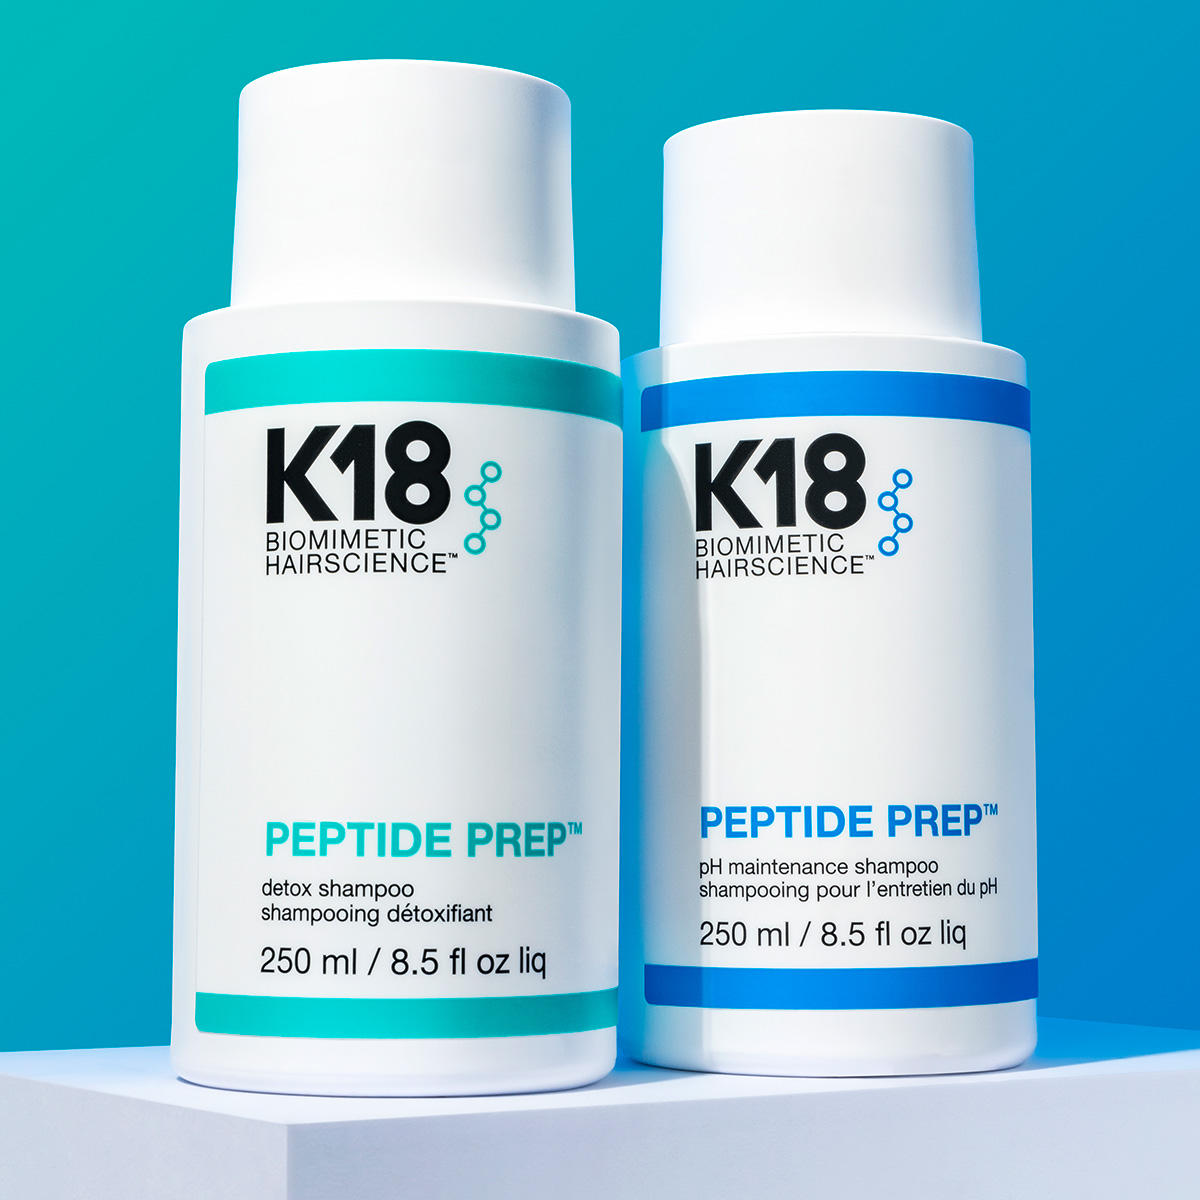 K18 Biomimetic Hairscience PEPTIDE PREP Detox Shampoo 250 ml - 4